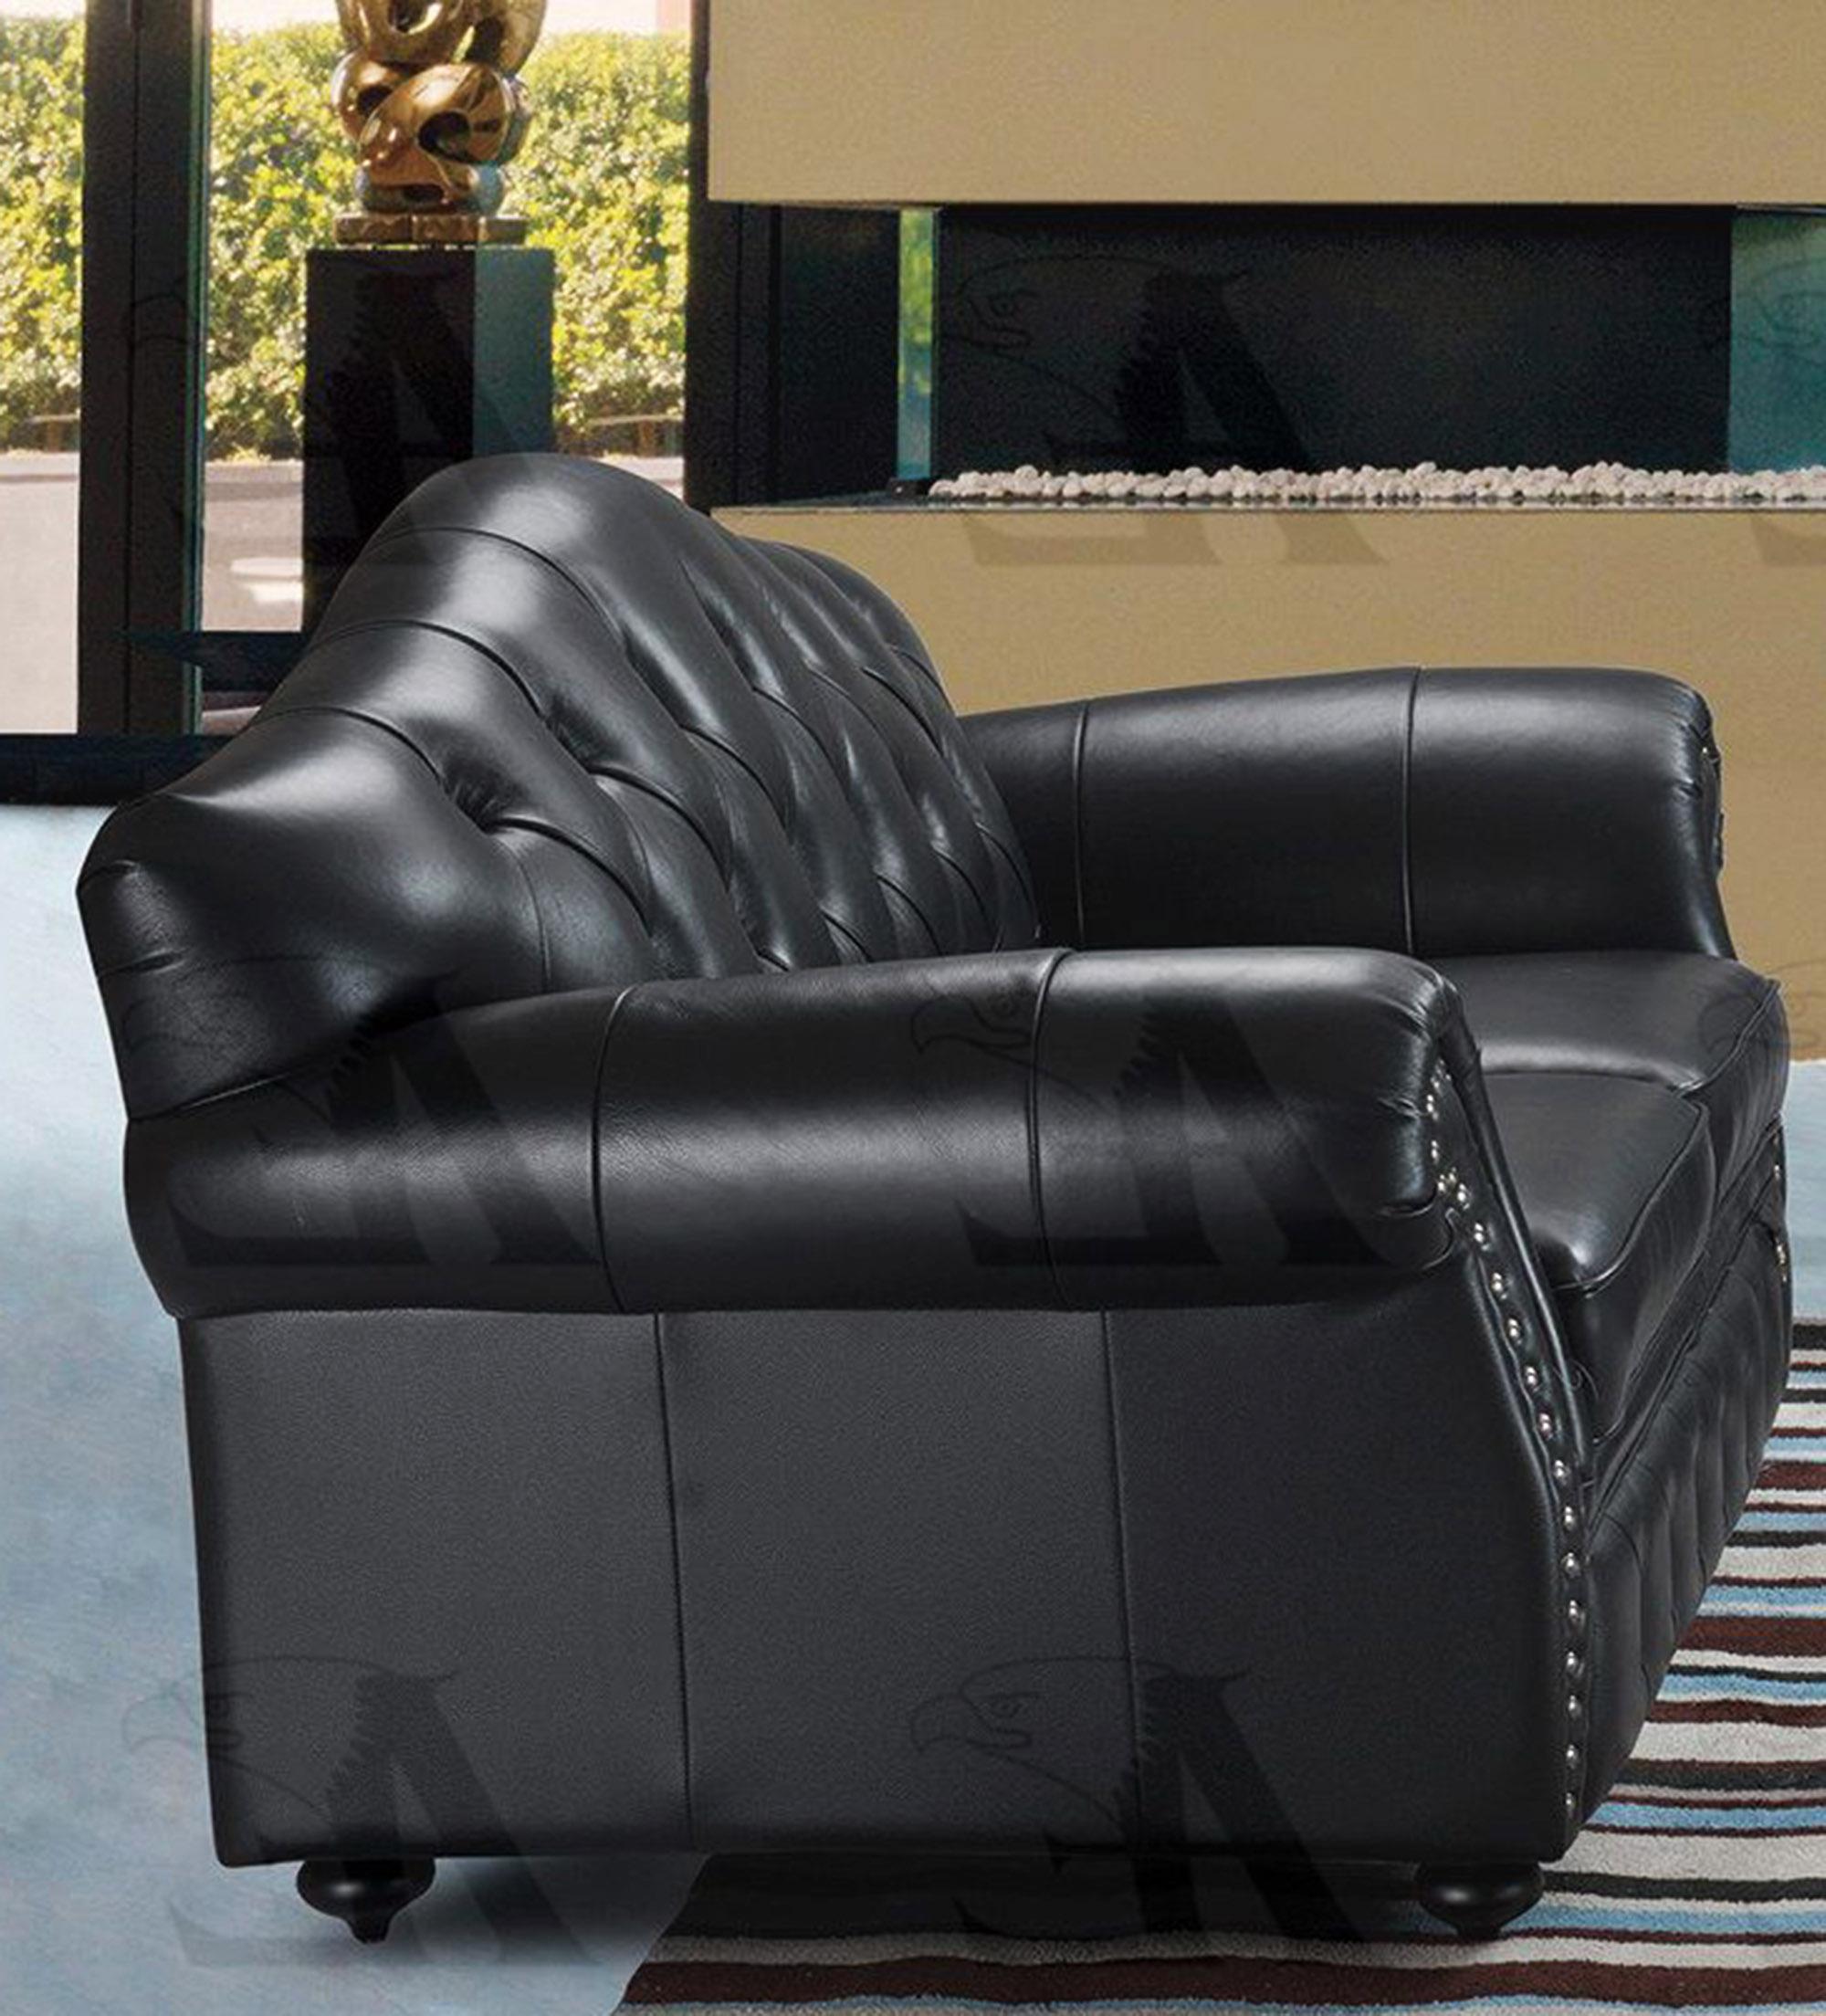 

    
American Eagle Furniture EK699-BK Sofa Black EK699-BK
